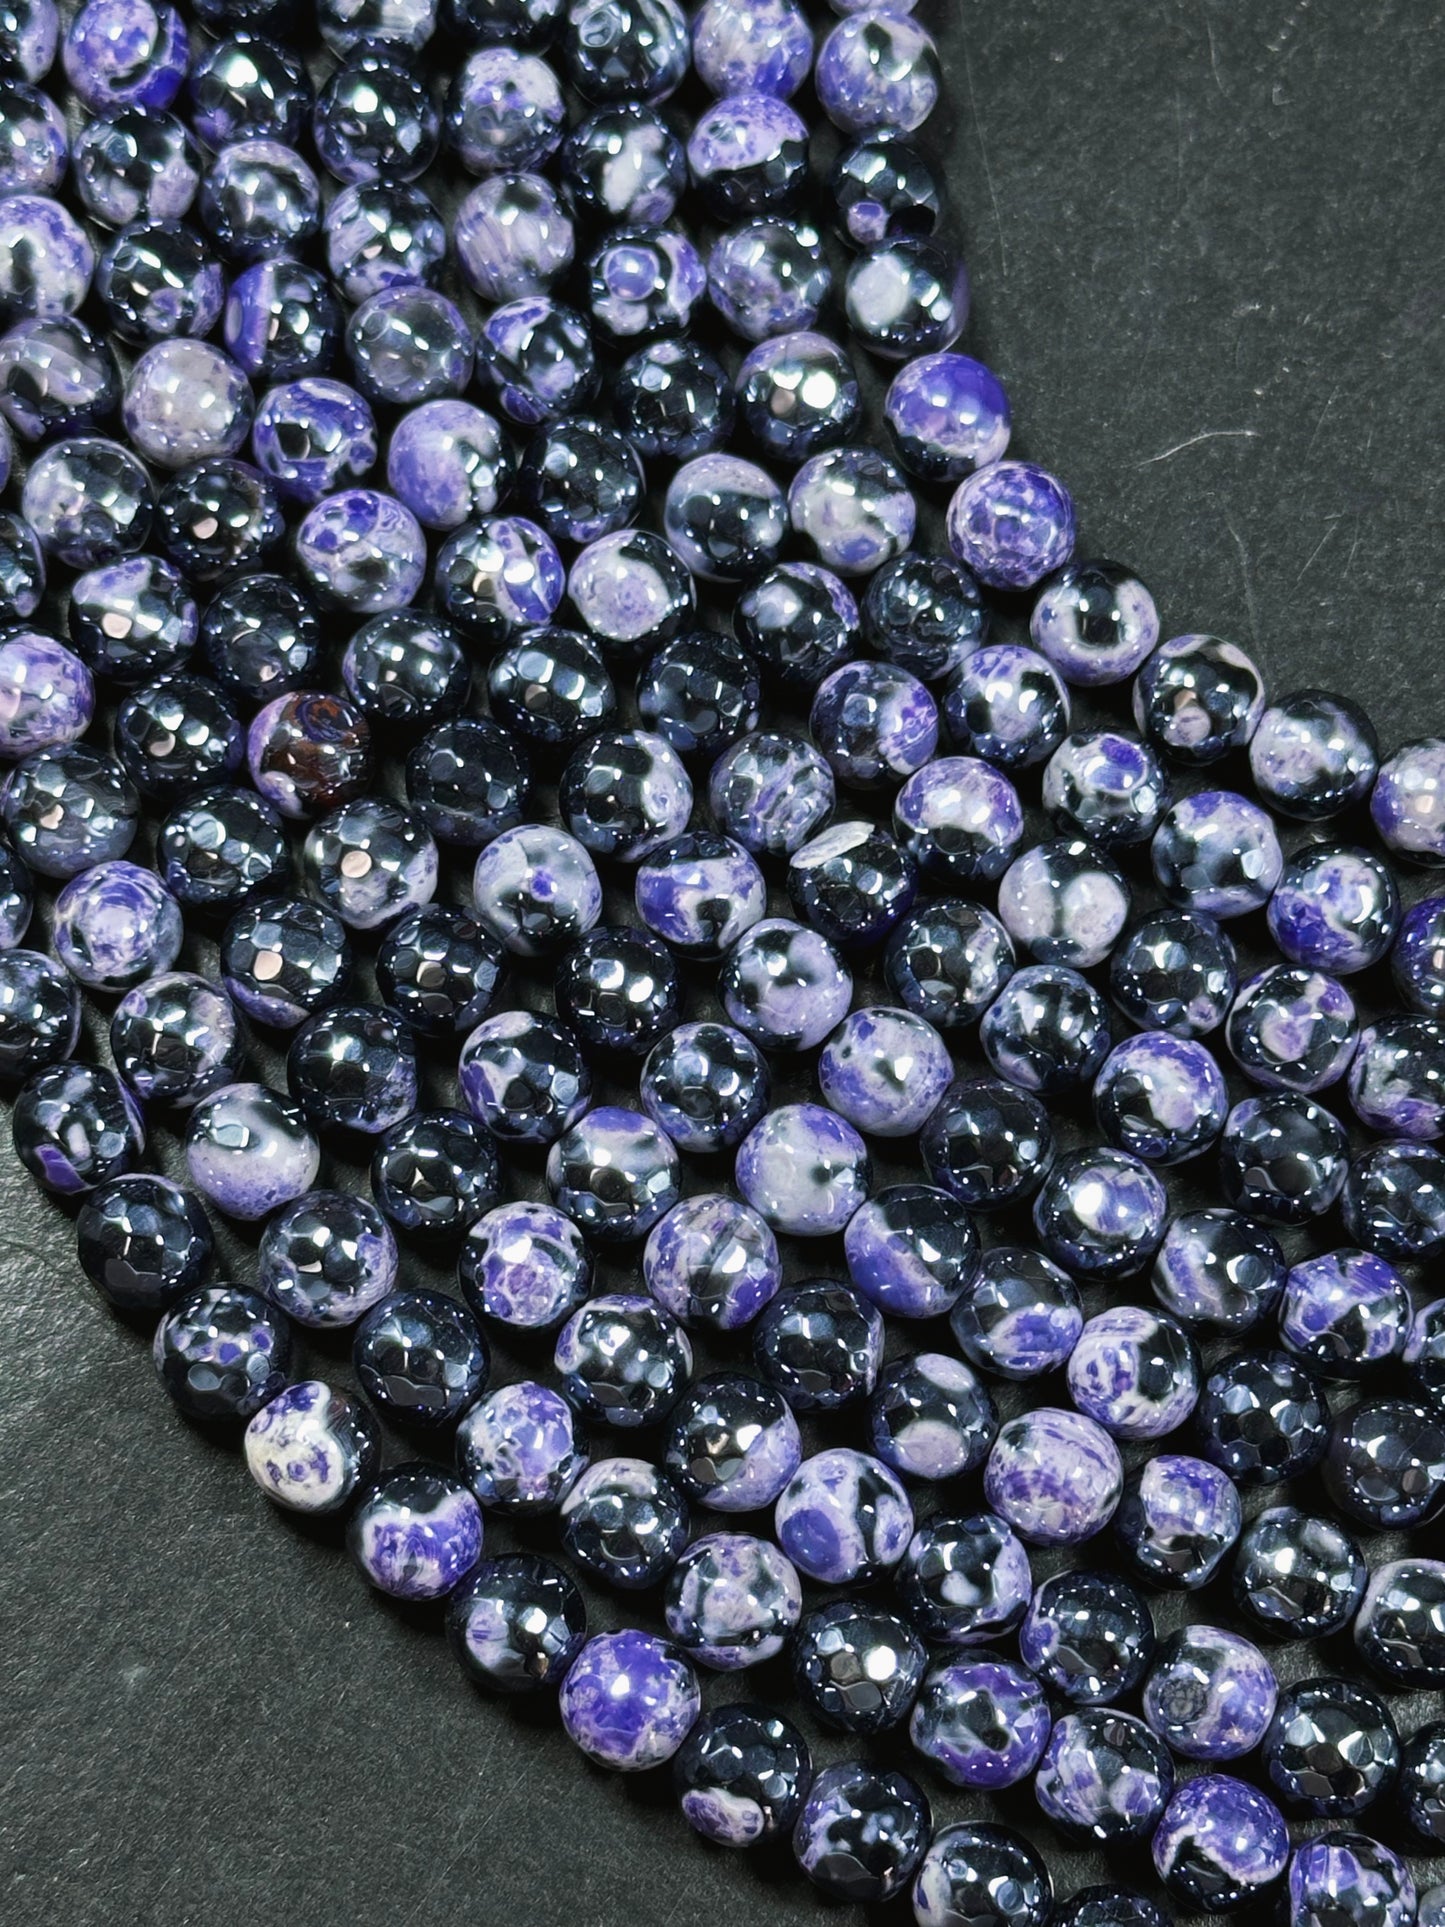 Mystic Natural Tibetan Agate Gemstone Bead Faceted 8mm 10mm Round Beads, Beautiful Mystic Purple Black Agate Stone Beads, Full Strand 15.5"